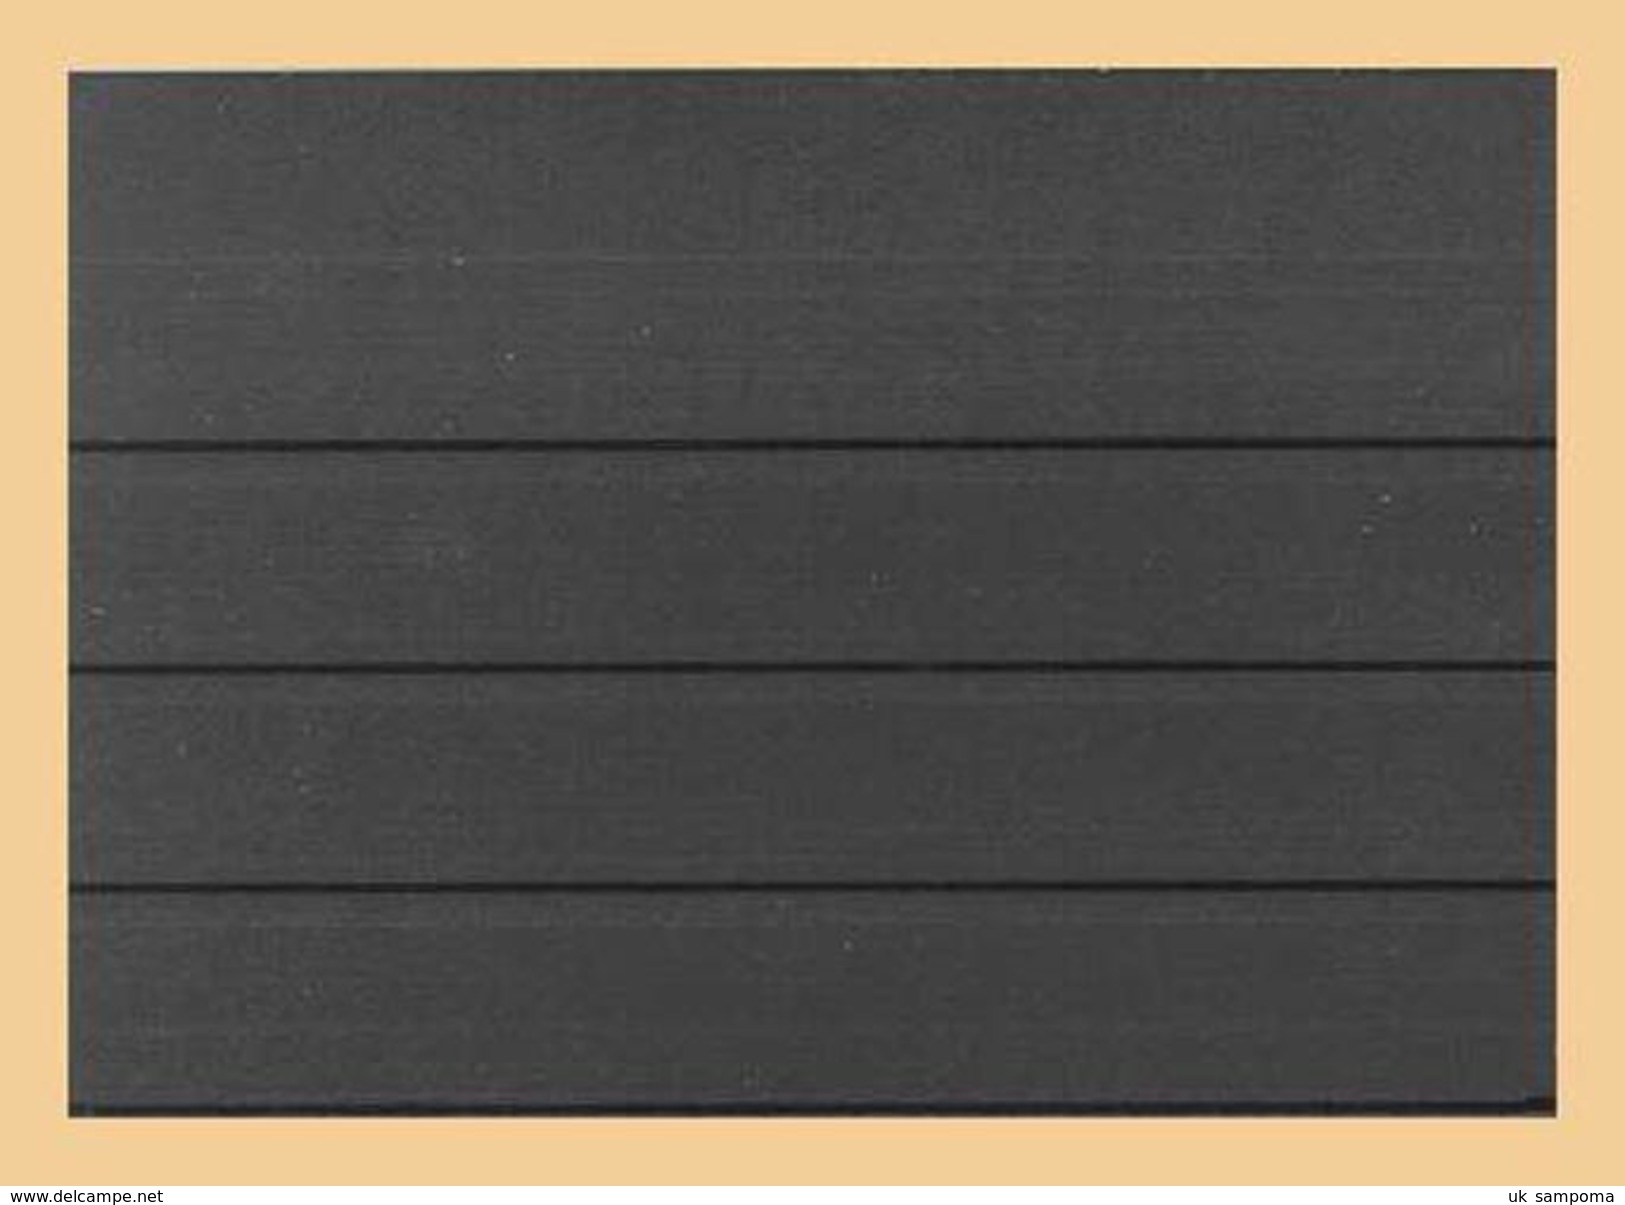 100x KOBRA-Versand-Einsteckkarten 148 X 105 Mm Nr. VL4 - Cartes De Stockage